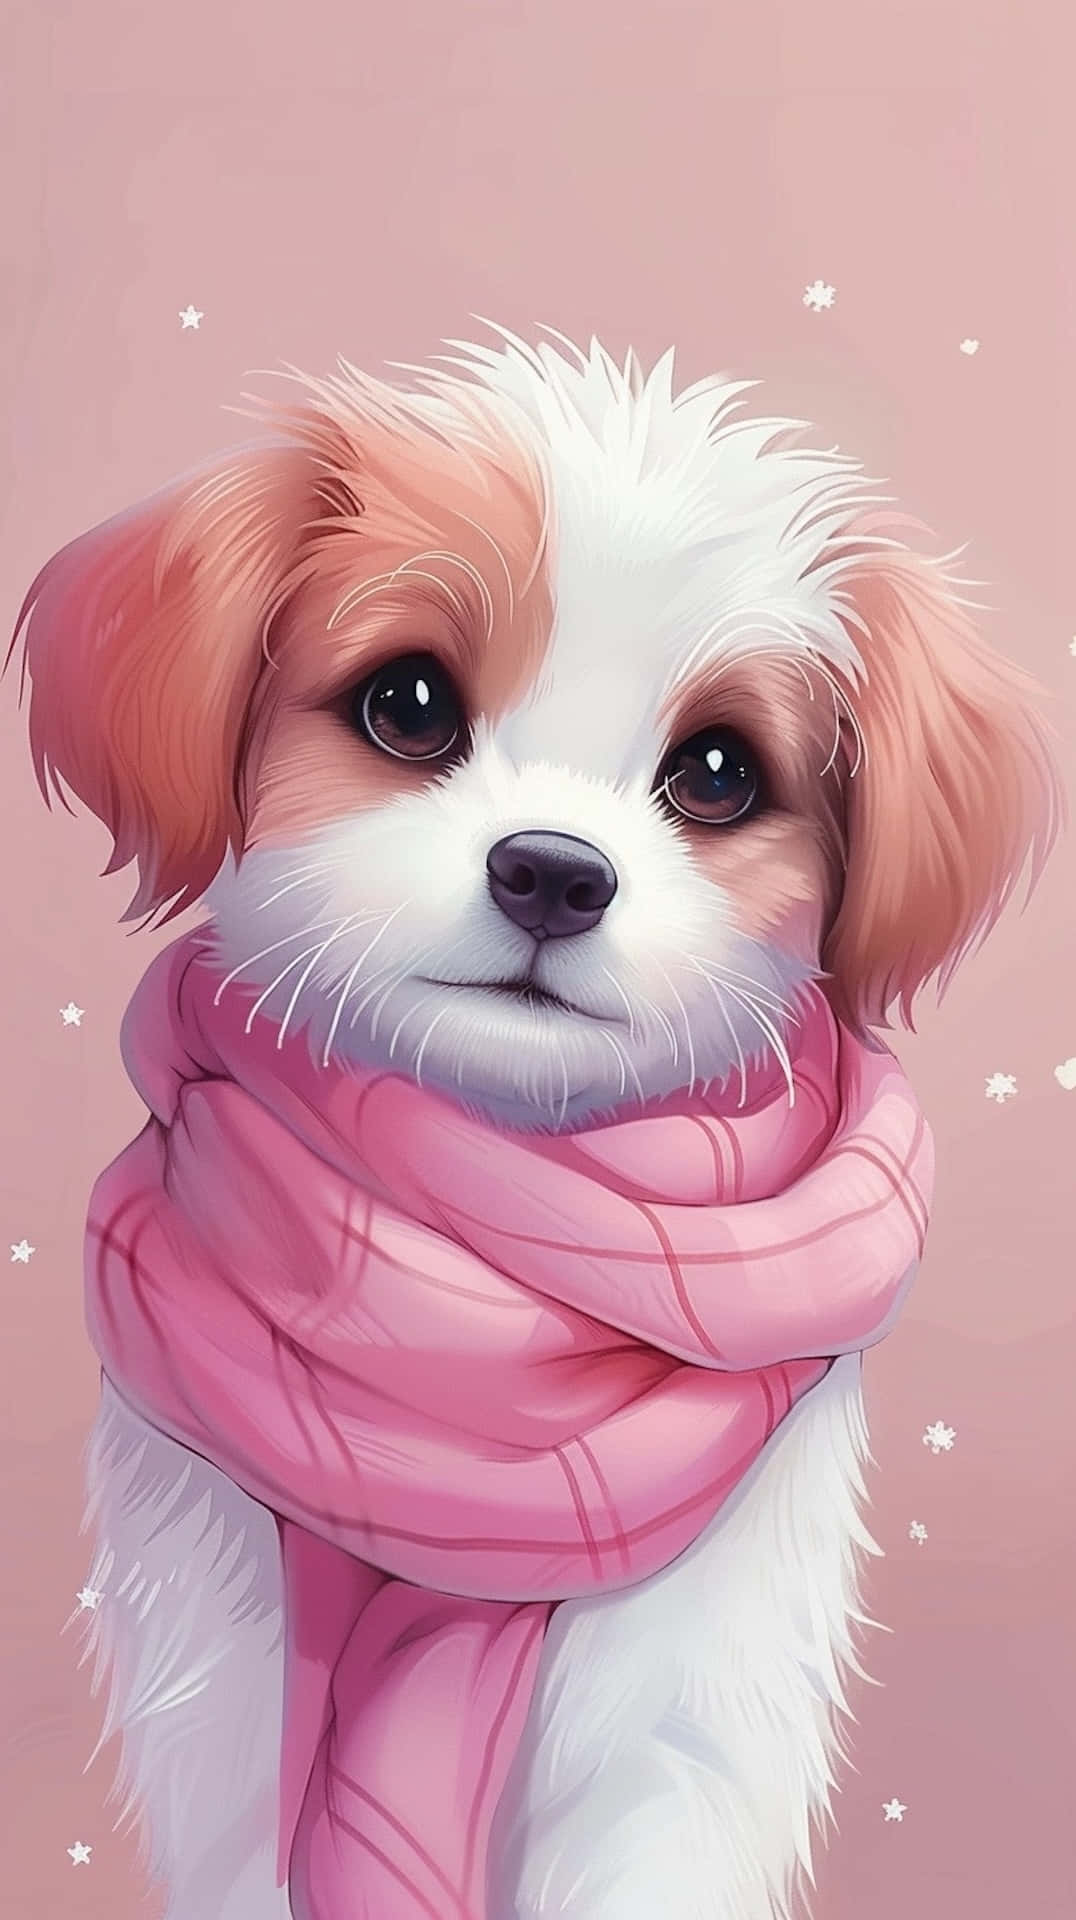 Adorable Anime Puppyin Pink Scarf.jpg Wallpaper